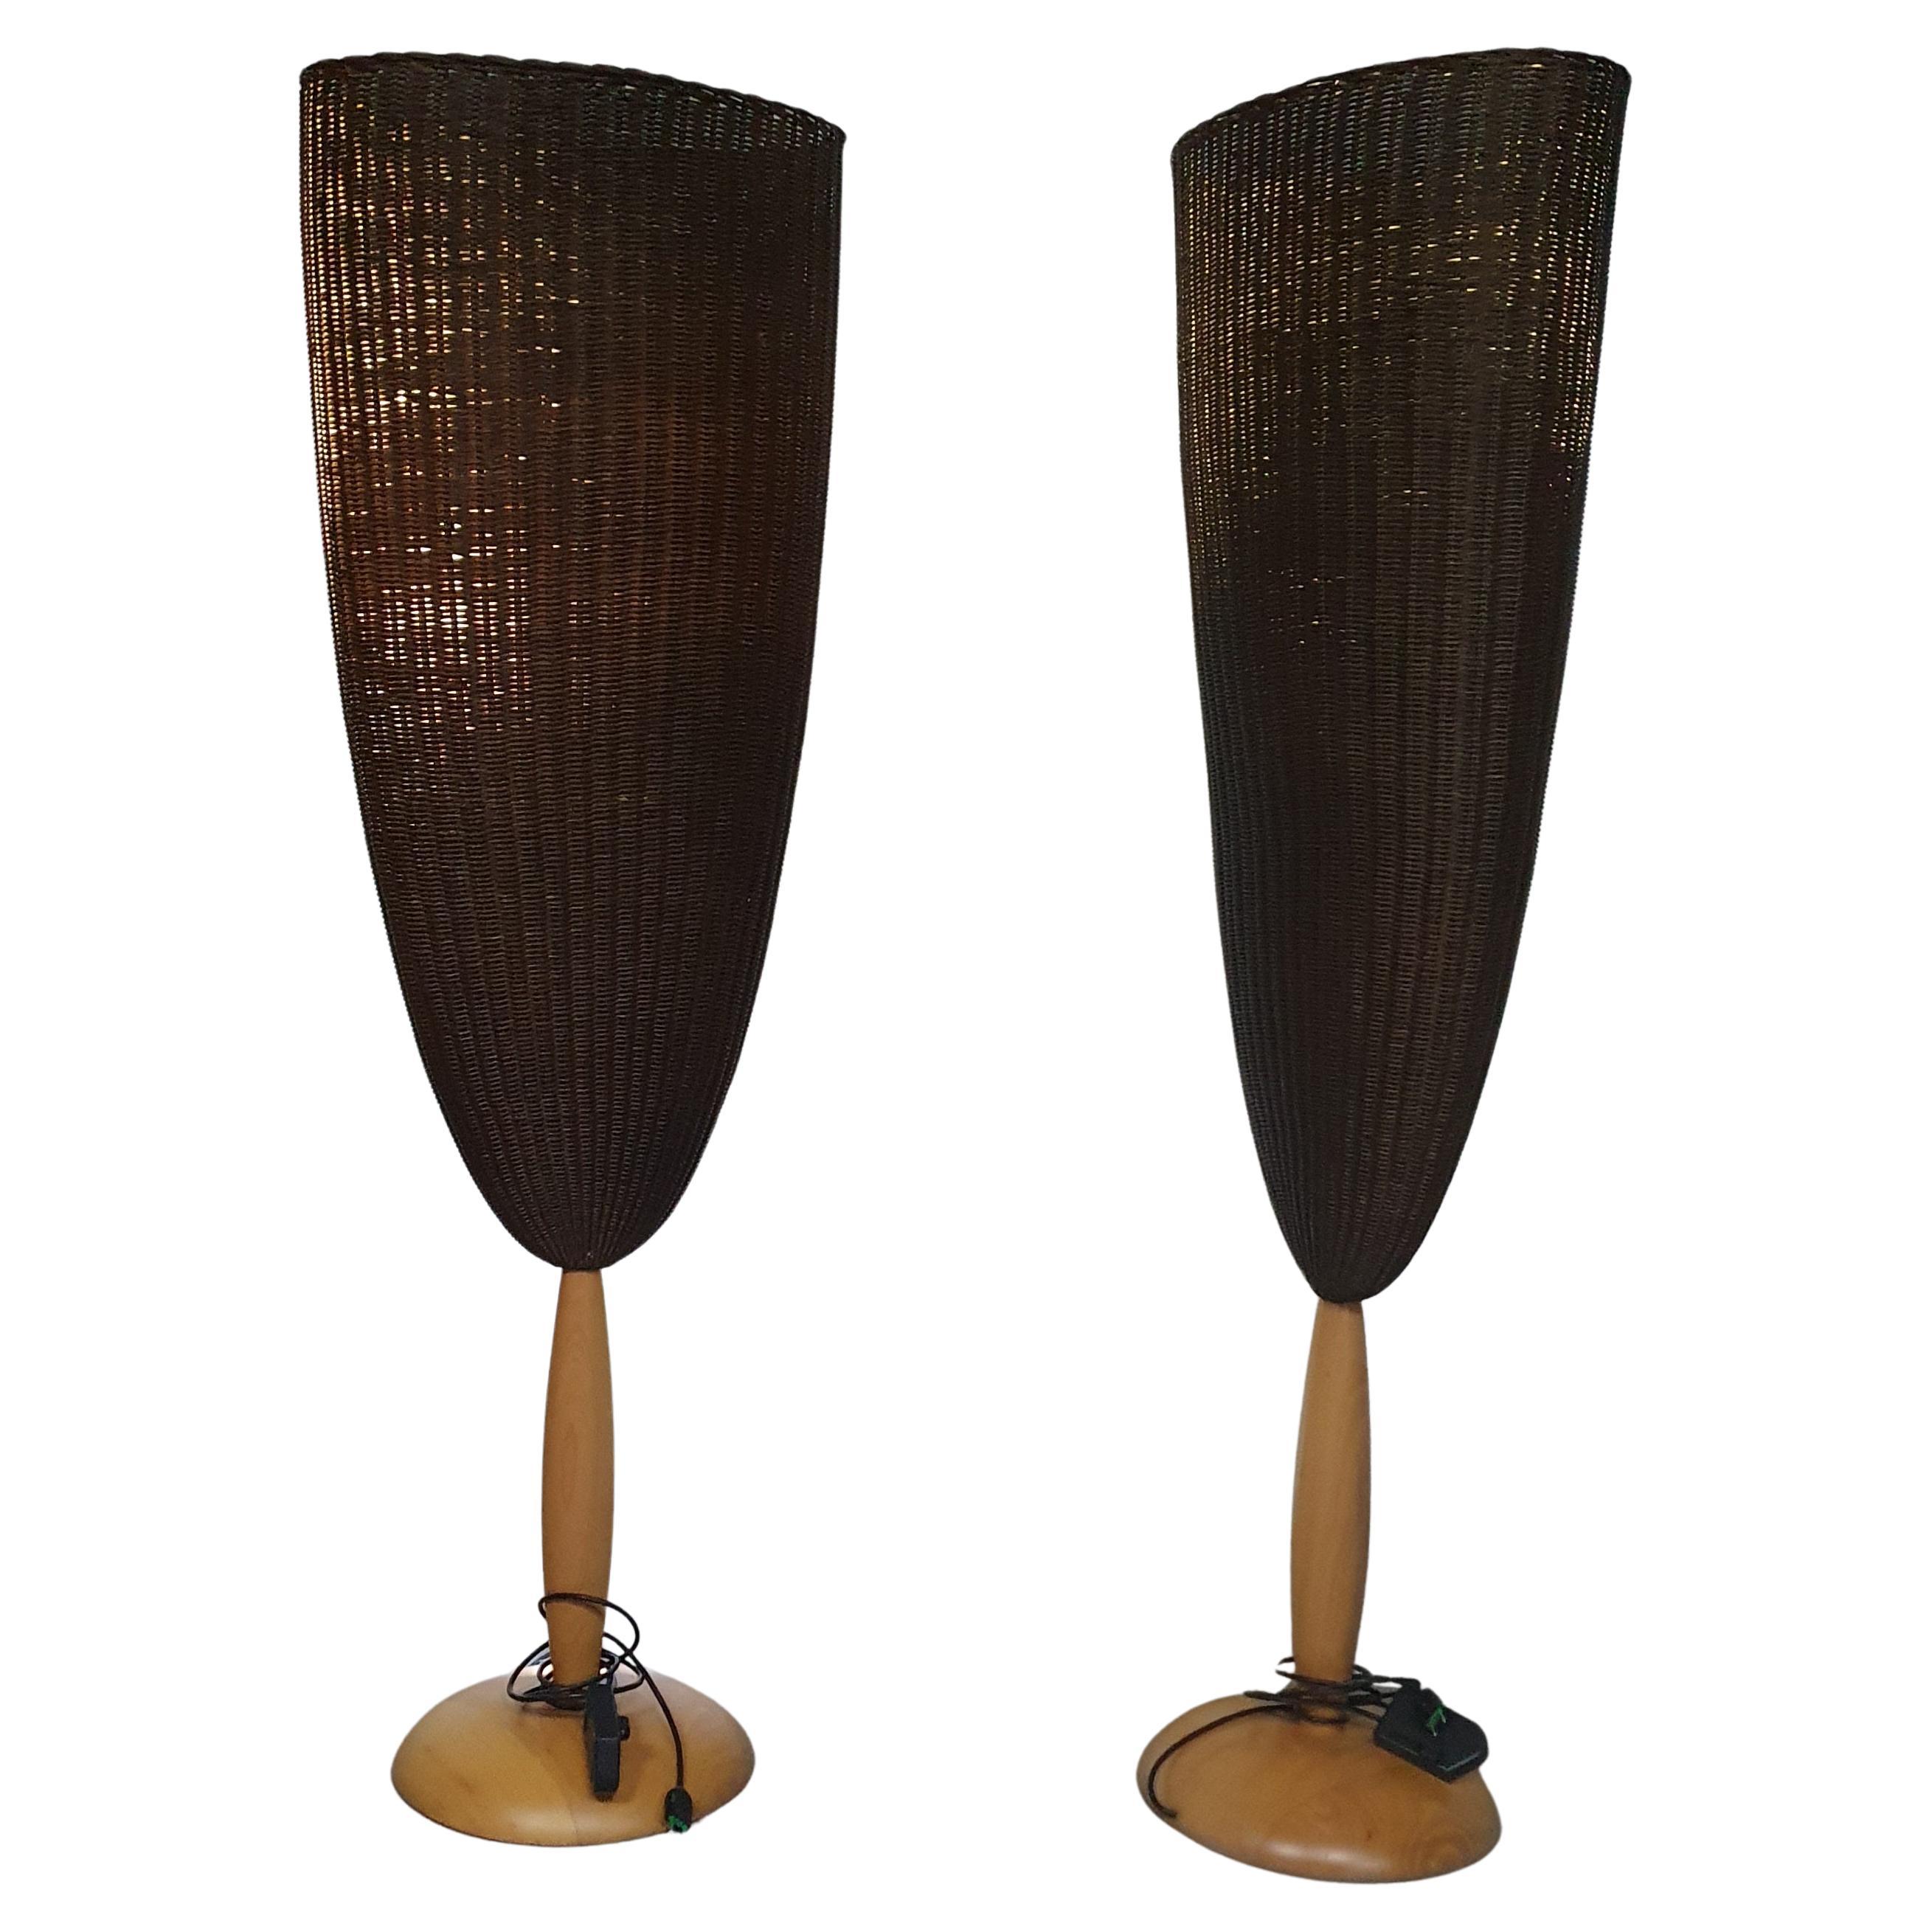 2 x Marco Agnoli for Pierantonio Bonacina XL / Flûte Floor Lamp in Cane and Wood